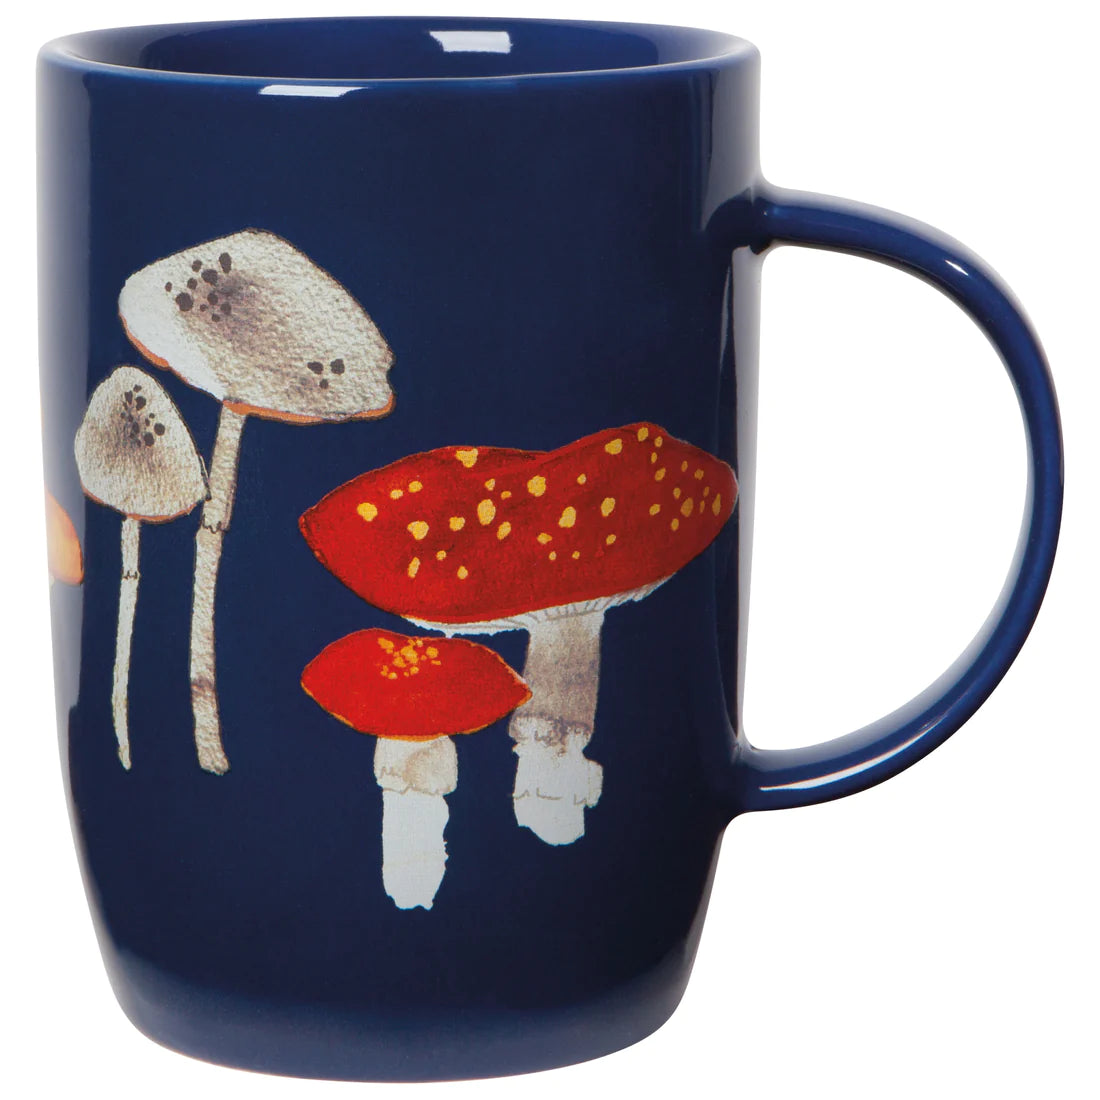 Tall Mug - Field Mushrooms